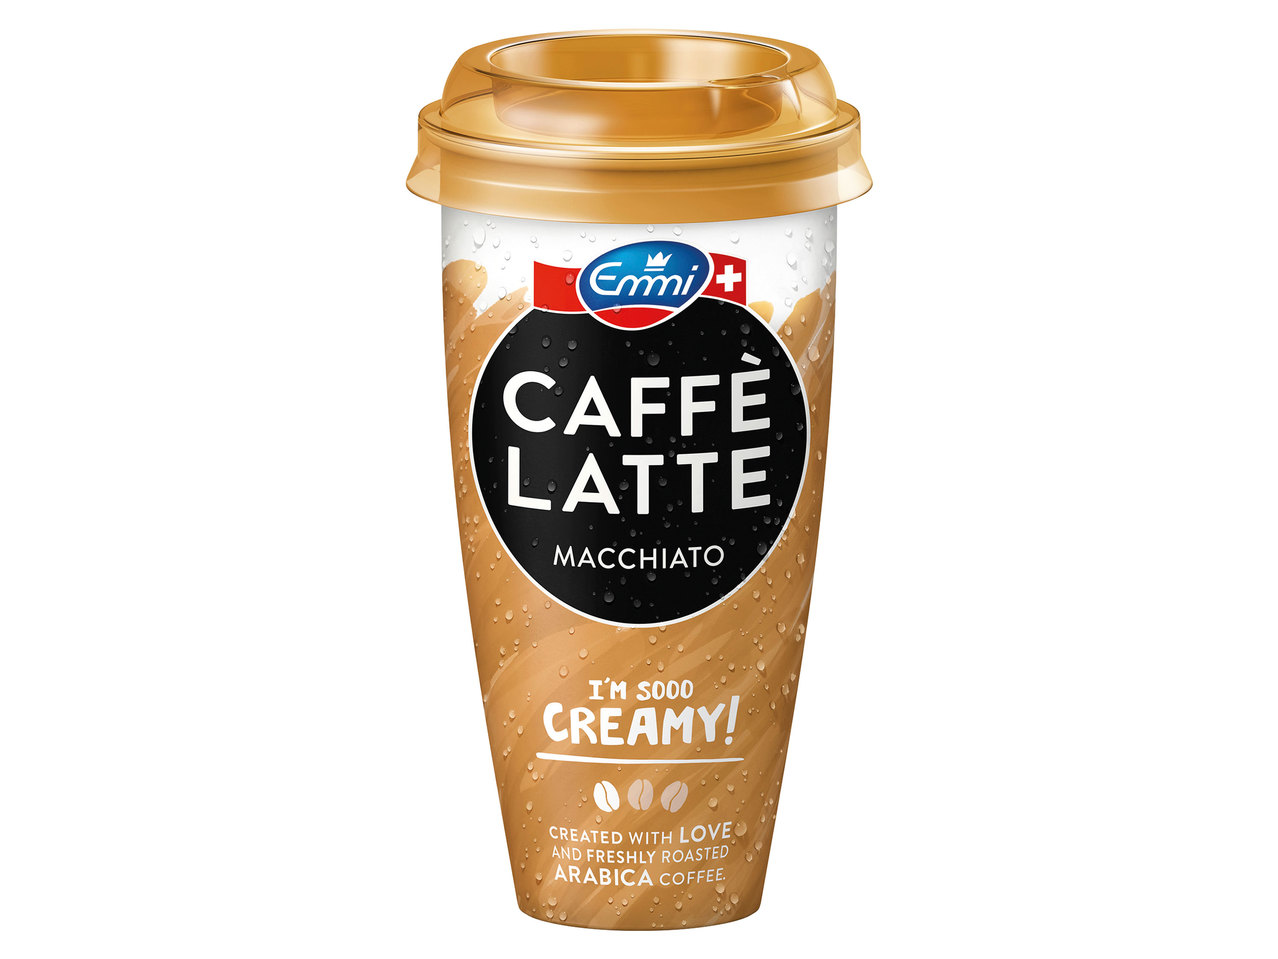 EMMI Caffè Latte